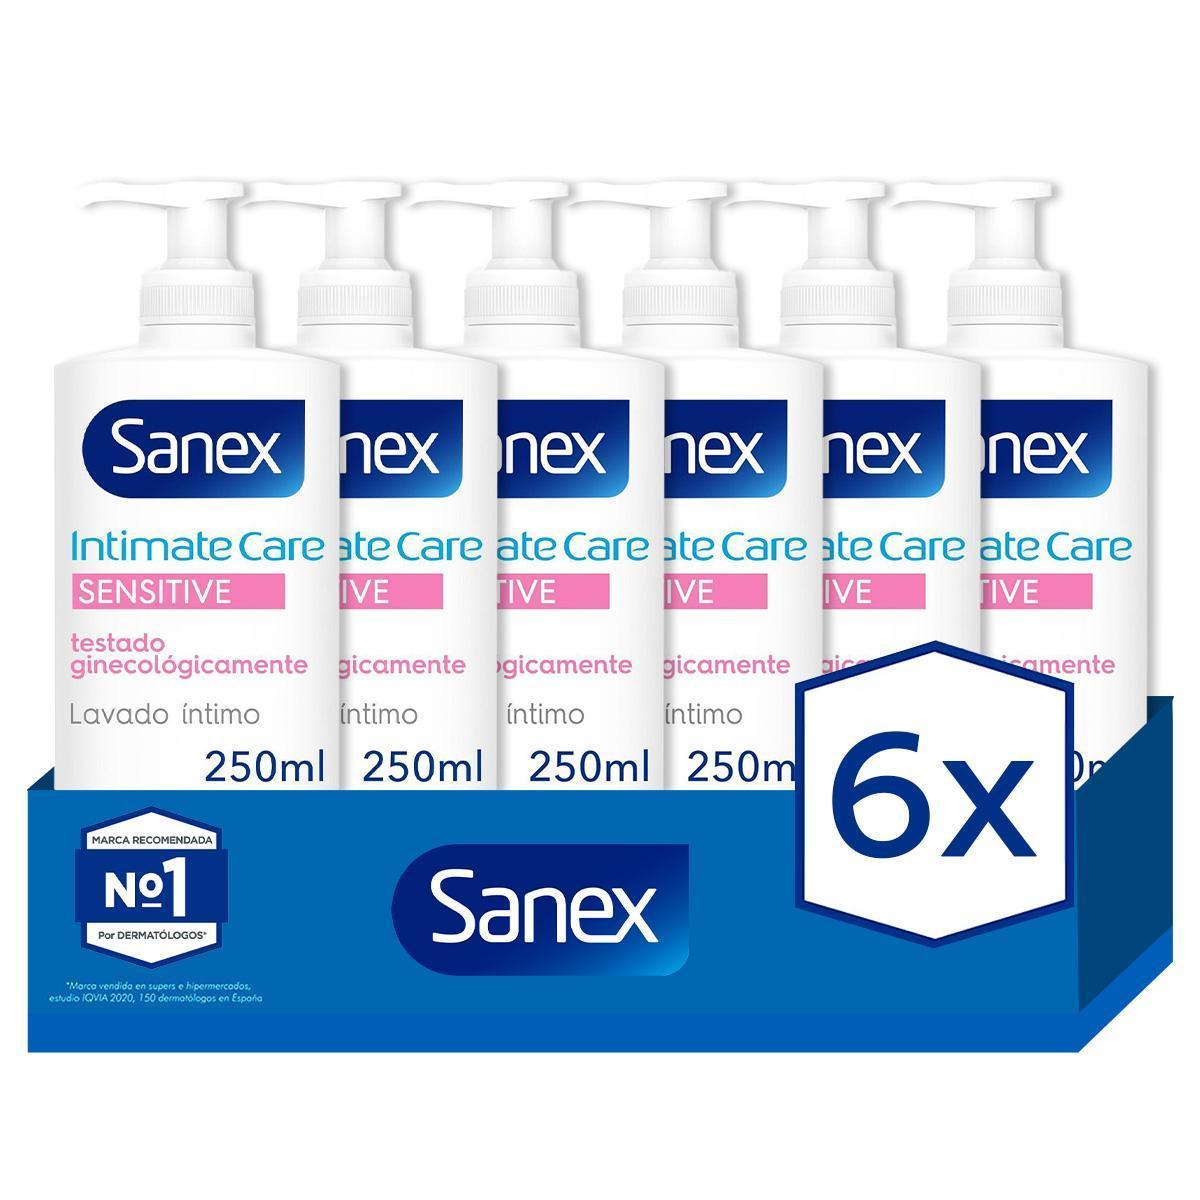 Sanex - Gel lavado íntimo SANEX Intimate Care, pieles sensibles hipoalergénico 250ml. Pack 6